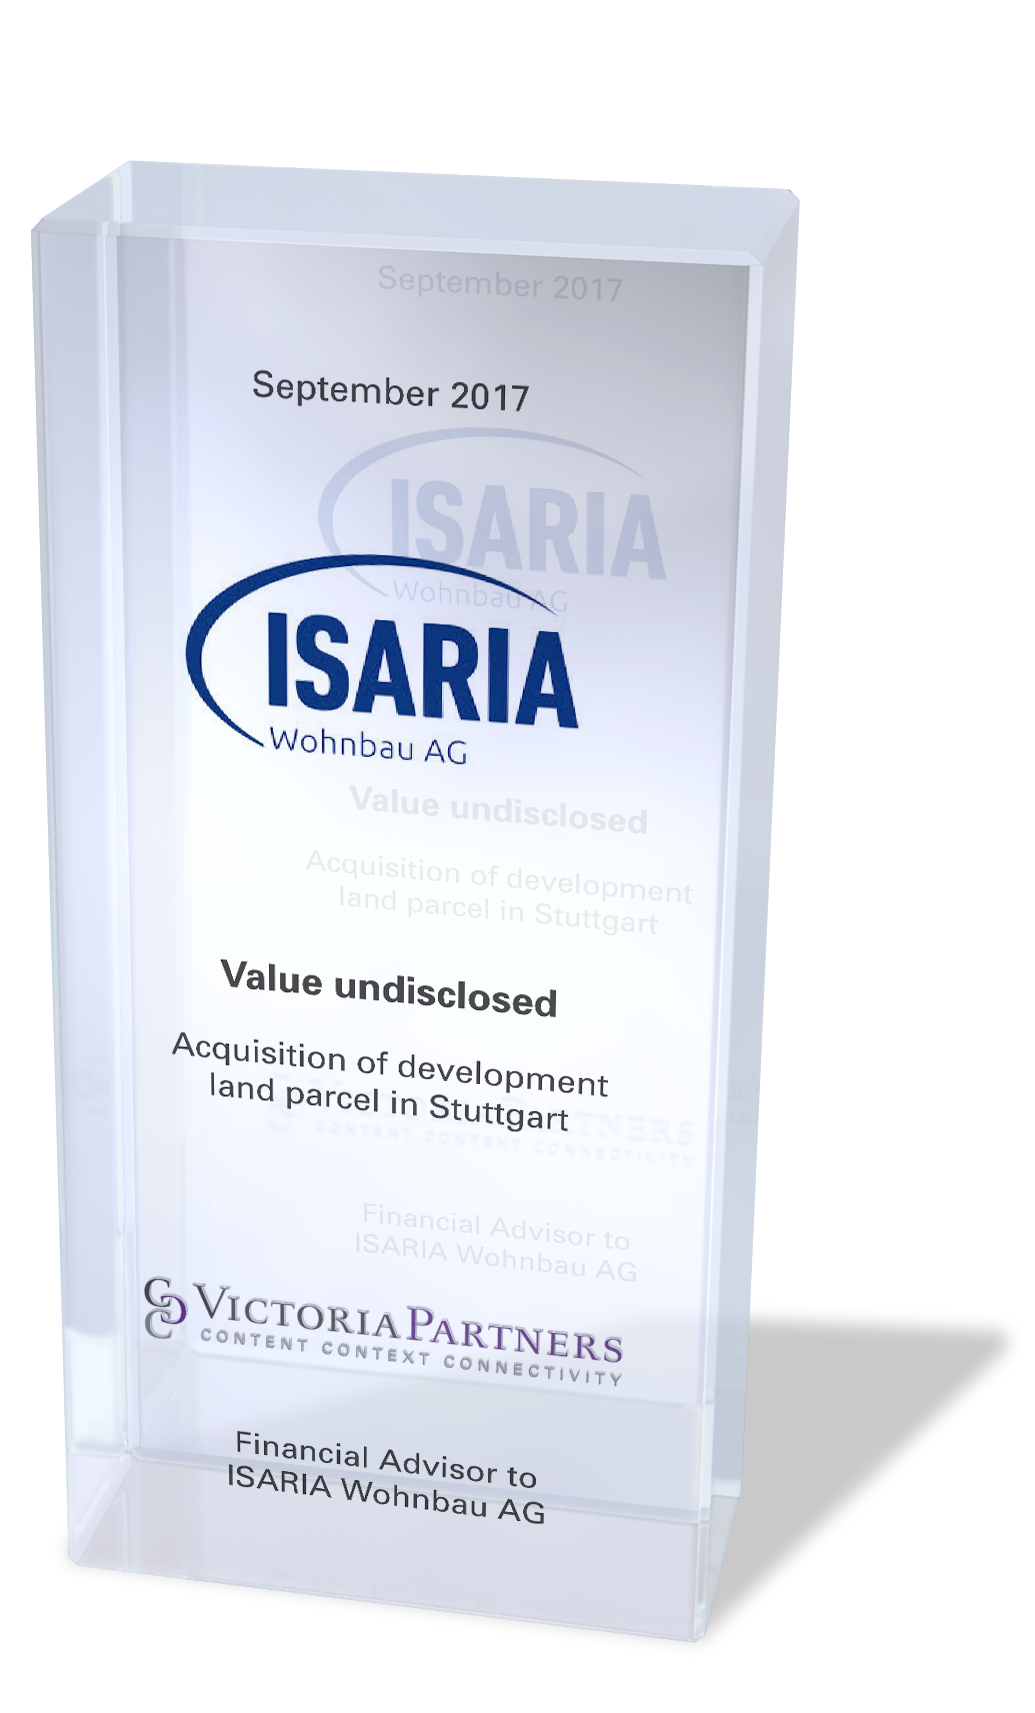 VICTORIAPARTNERS - Financial Advisor to ISARIA Wohnbau AG - September 2017